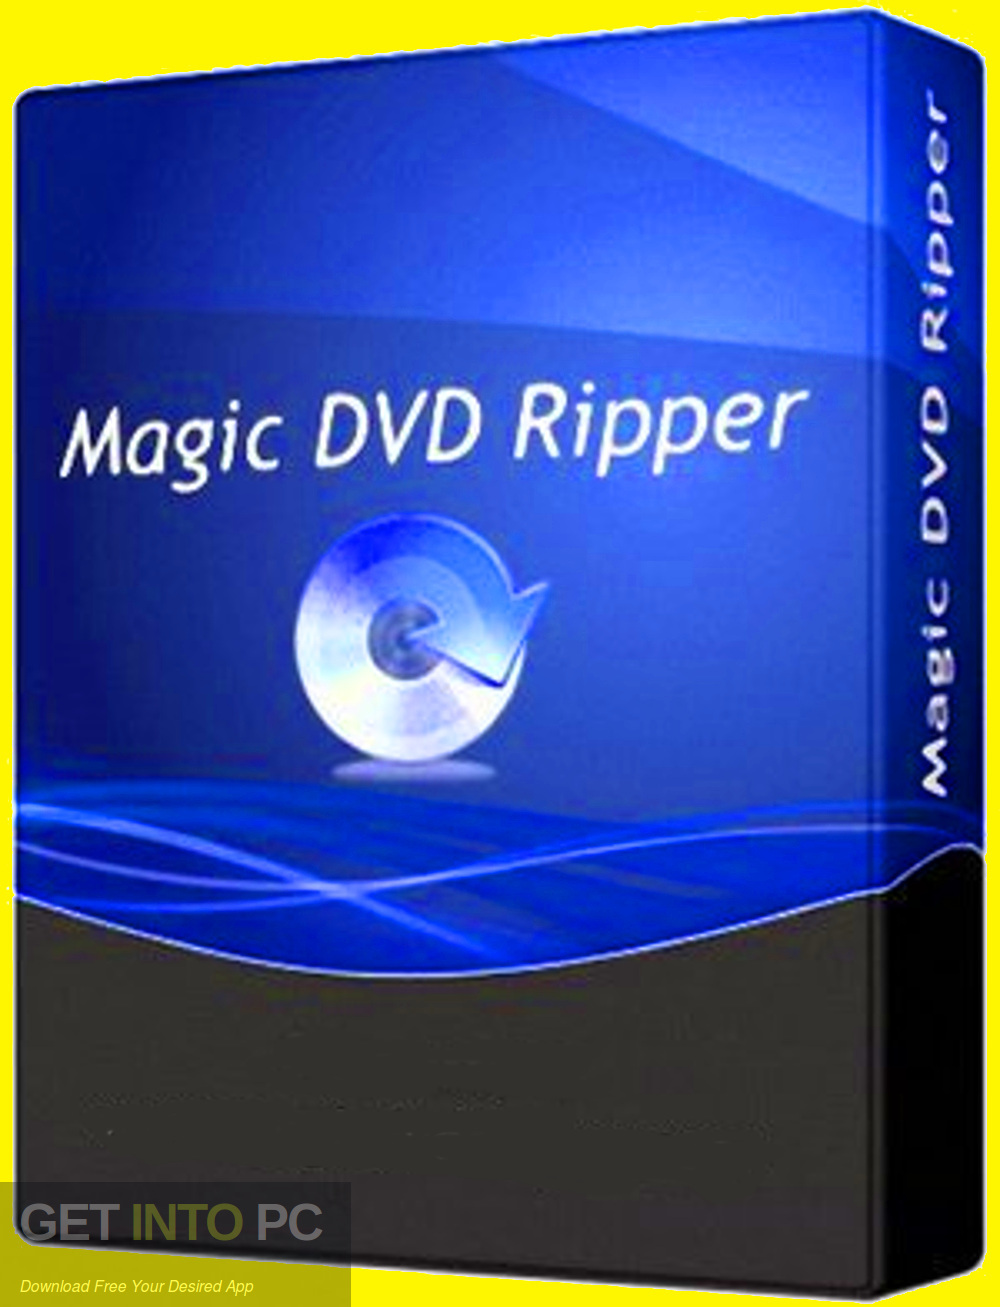 Magic DVD Ripper 2019 Free Download GetintoPC.com